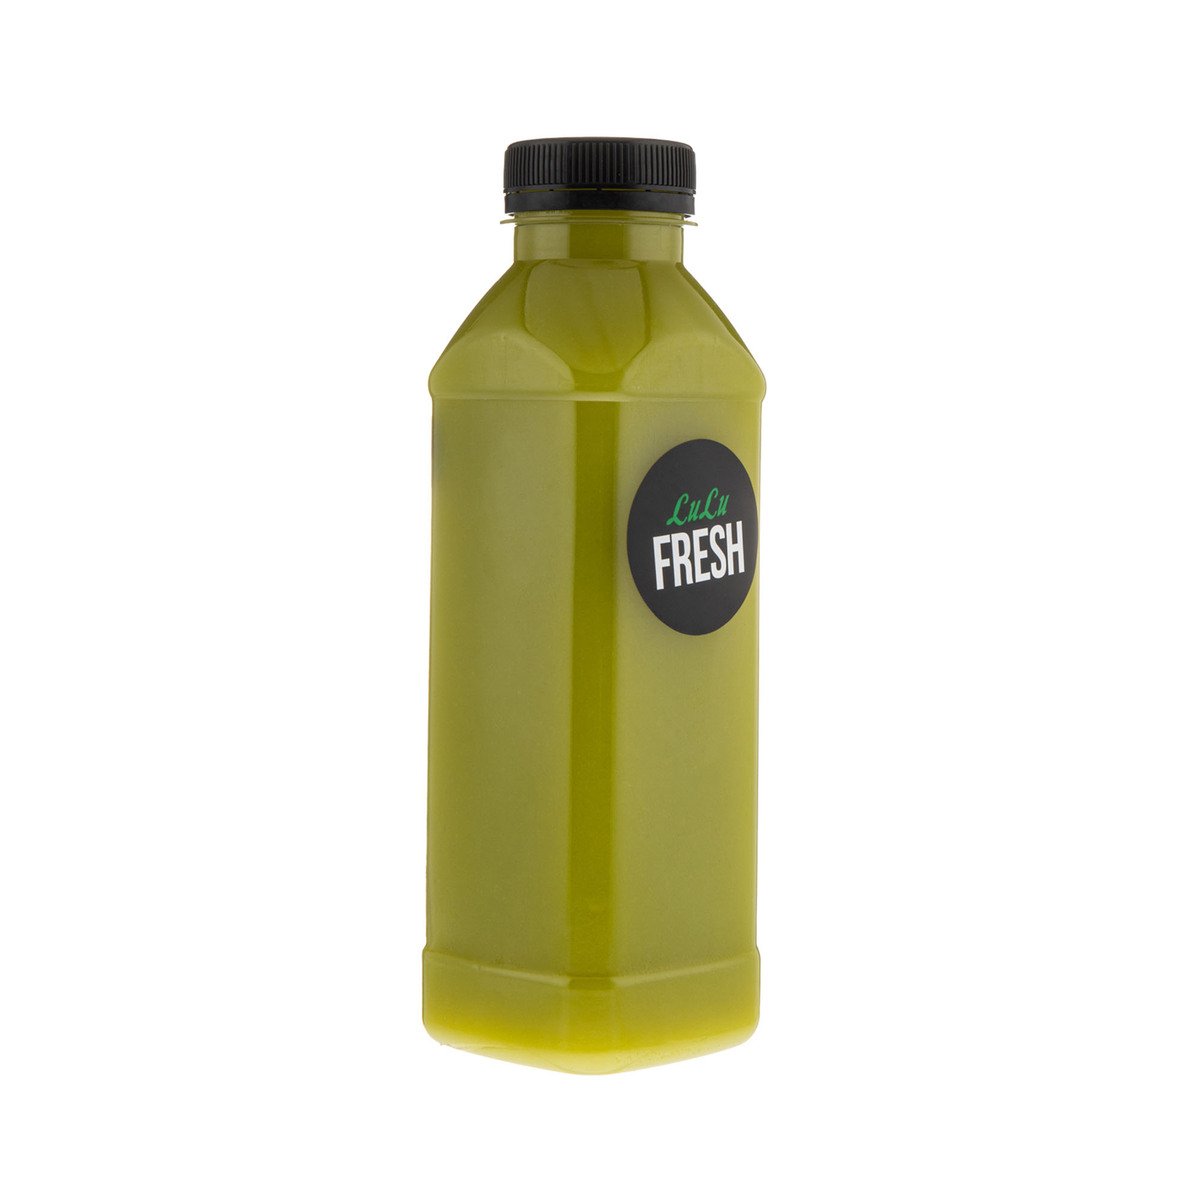 LuLu Fresh Mint Lemon Juice 500 ml Online at Best Price